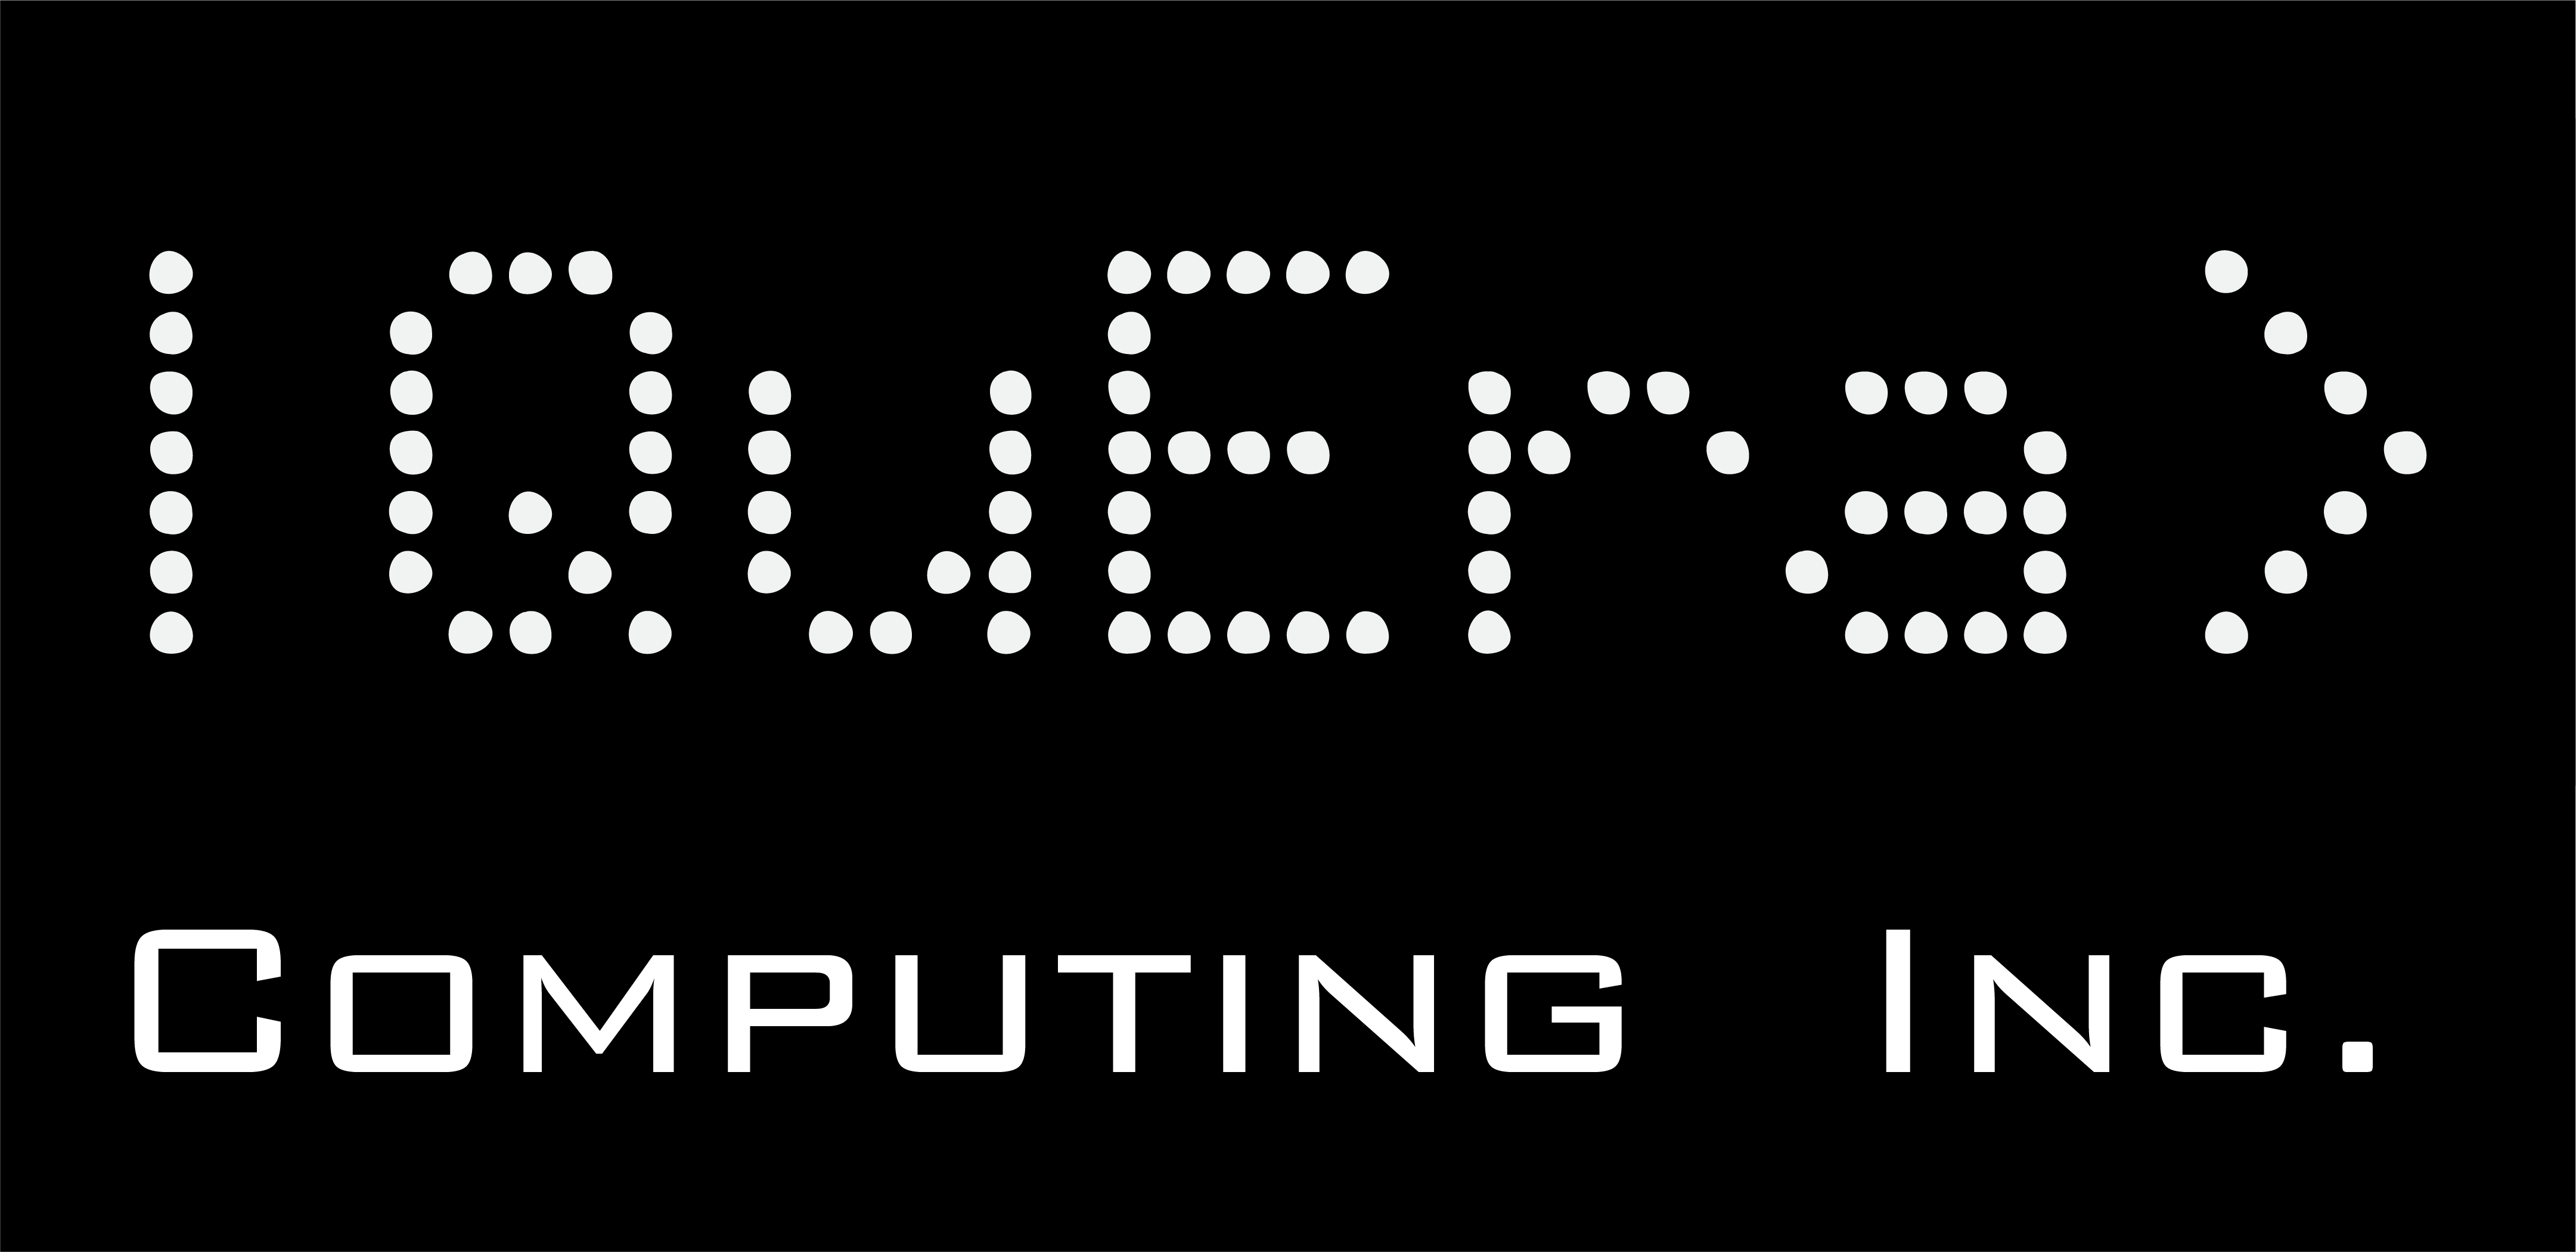 QuEraComputing 悄然崛起，斥资 17 万美元推出量子设备……